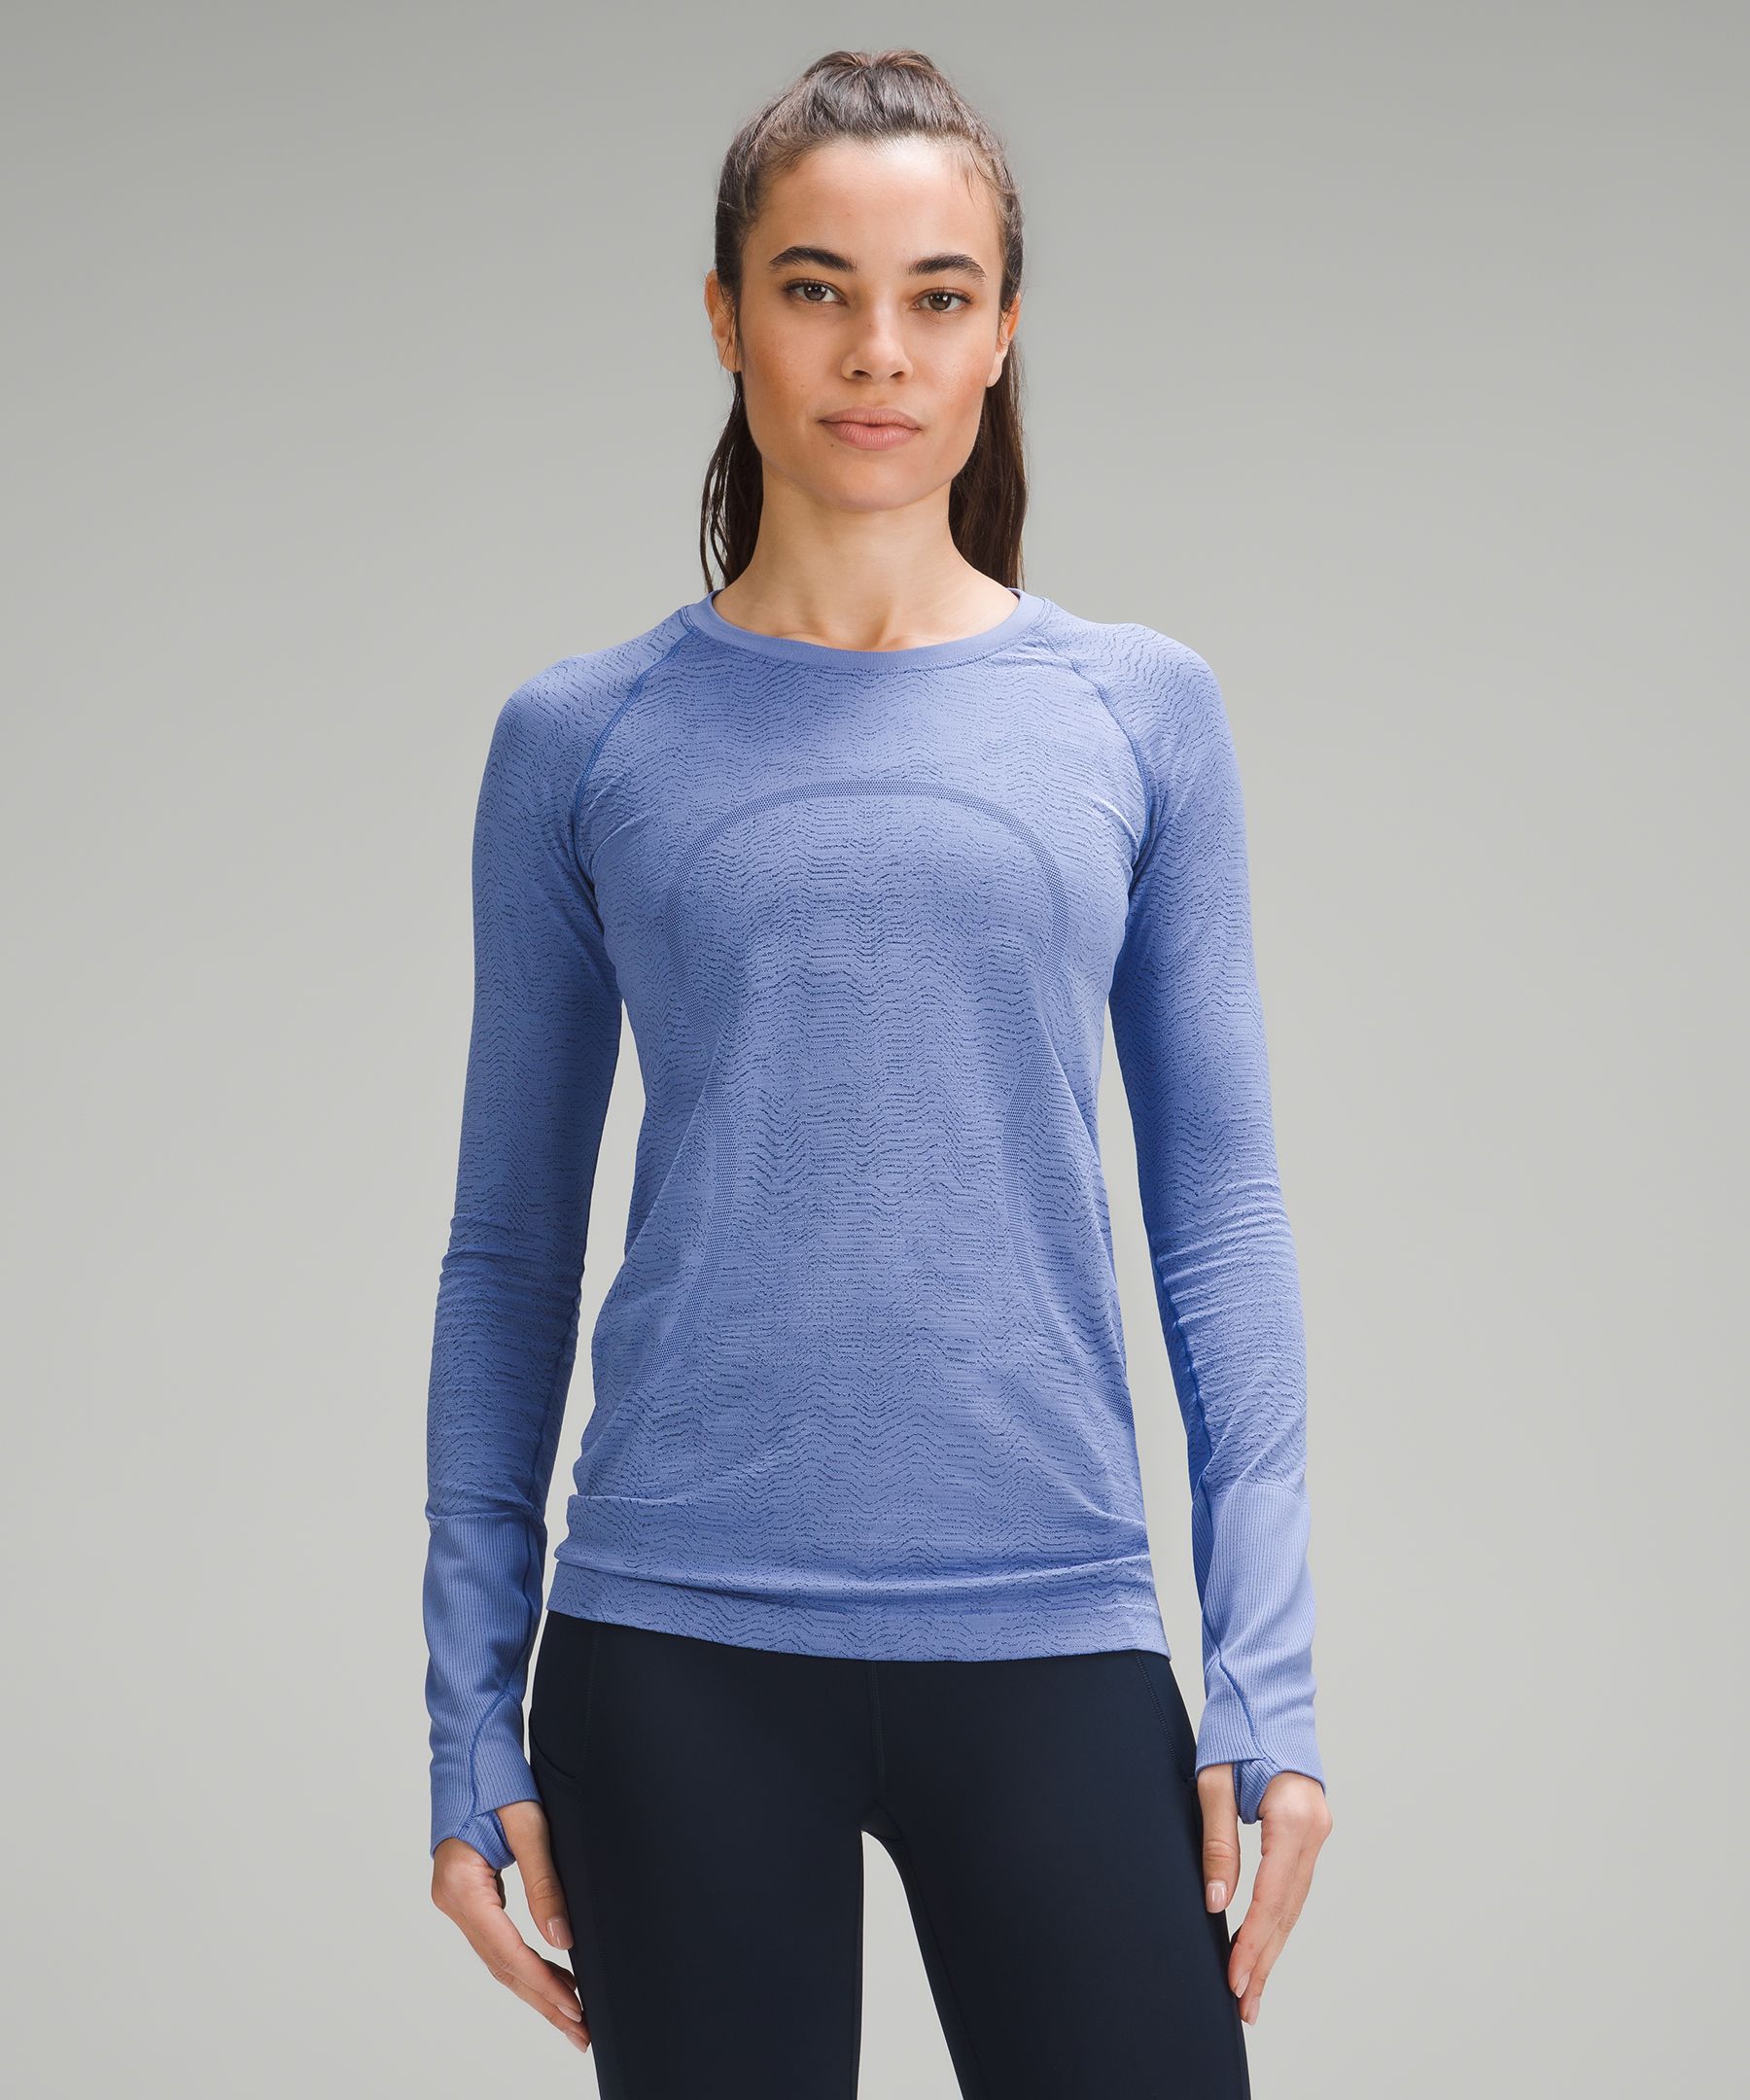 Lululemon Swiftly Tech Short Sleeve Shirt 2.0 In Mineral Blue